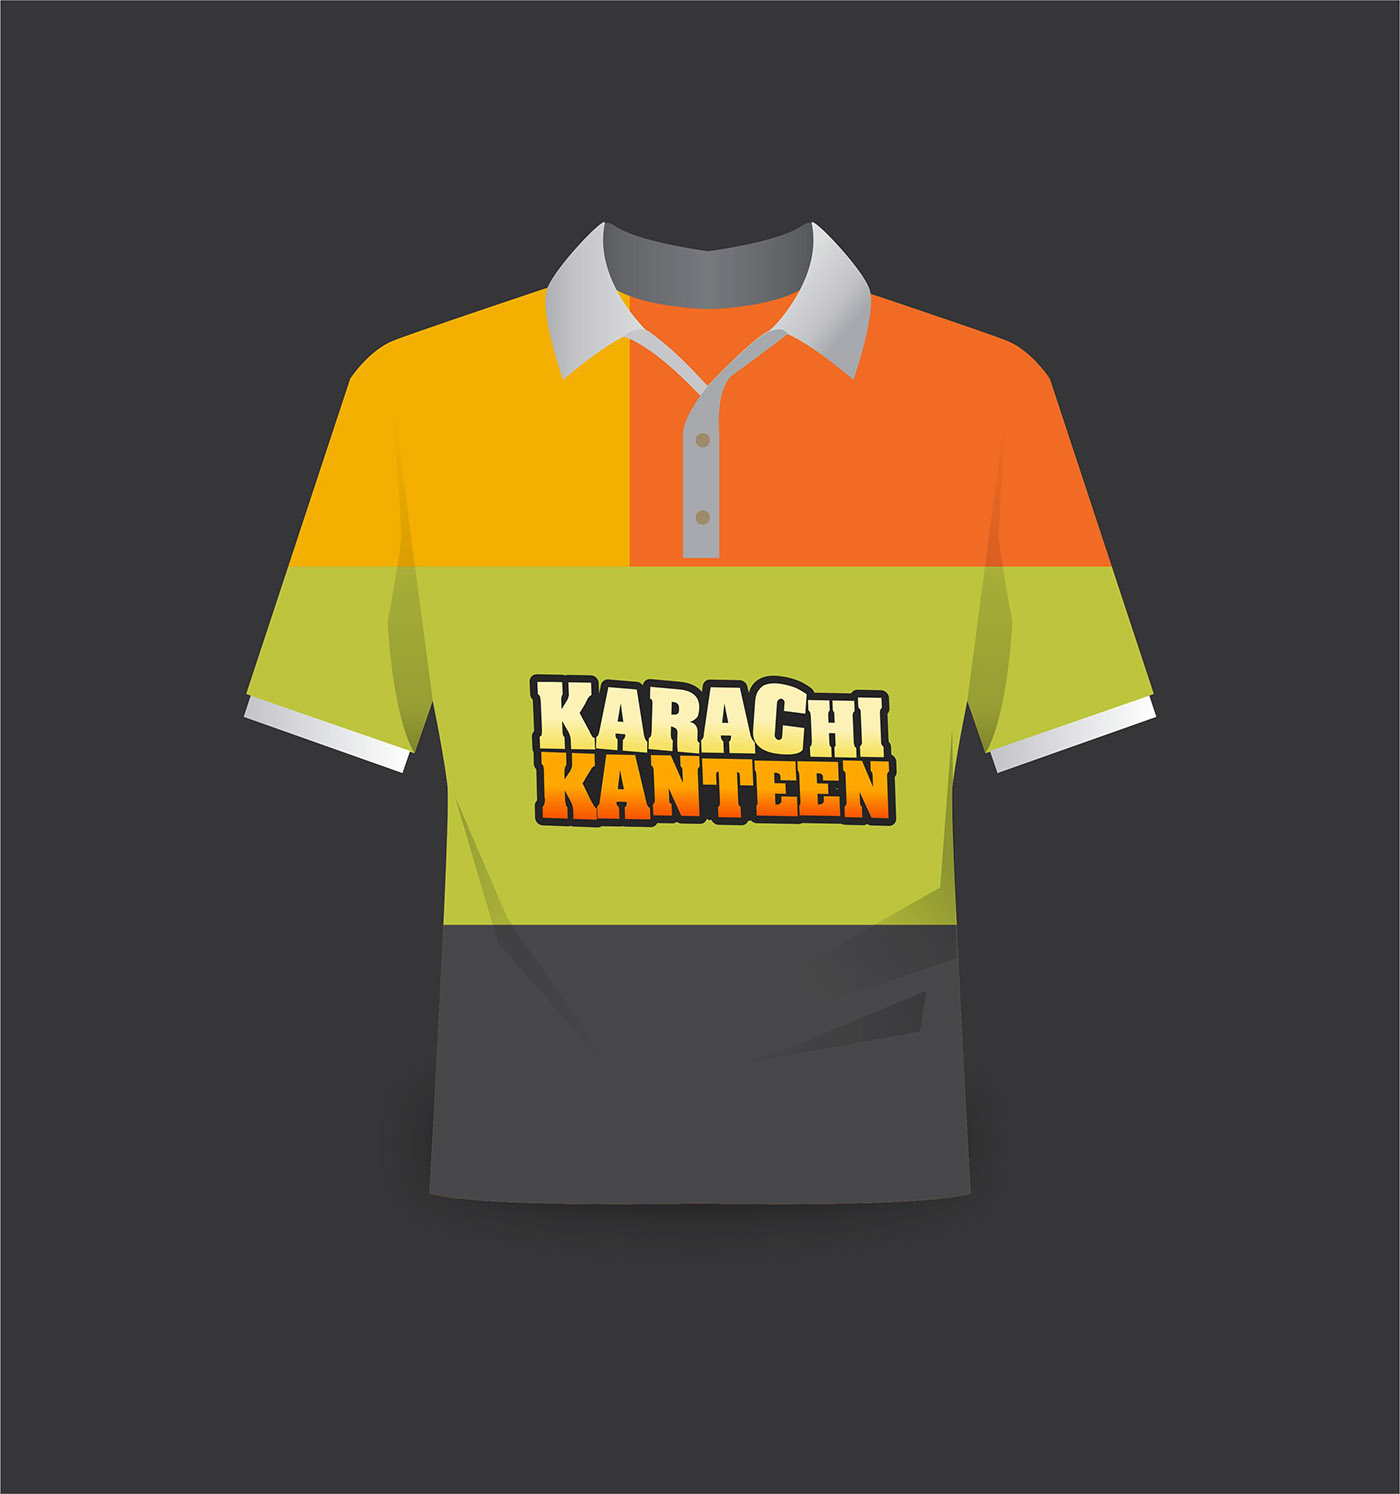 branding  Food  Karachi Kanteen Canteen design graphics Bariyani karachi lahore Fast food